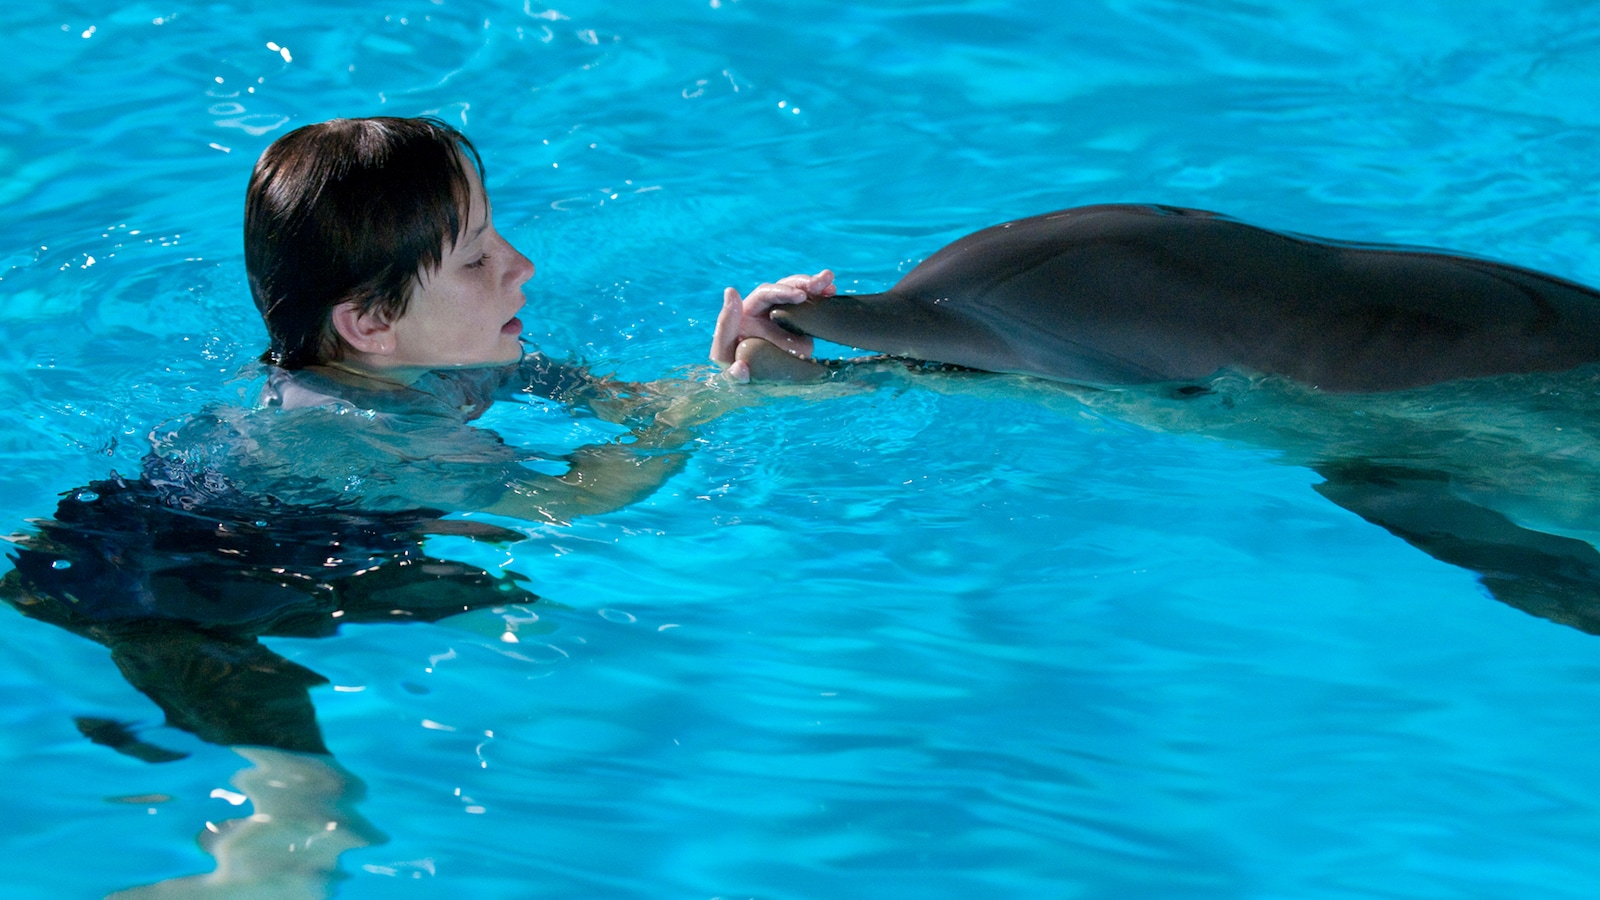 dolphin-tale-2011